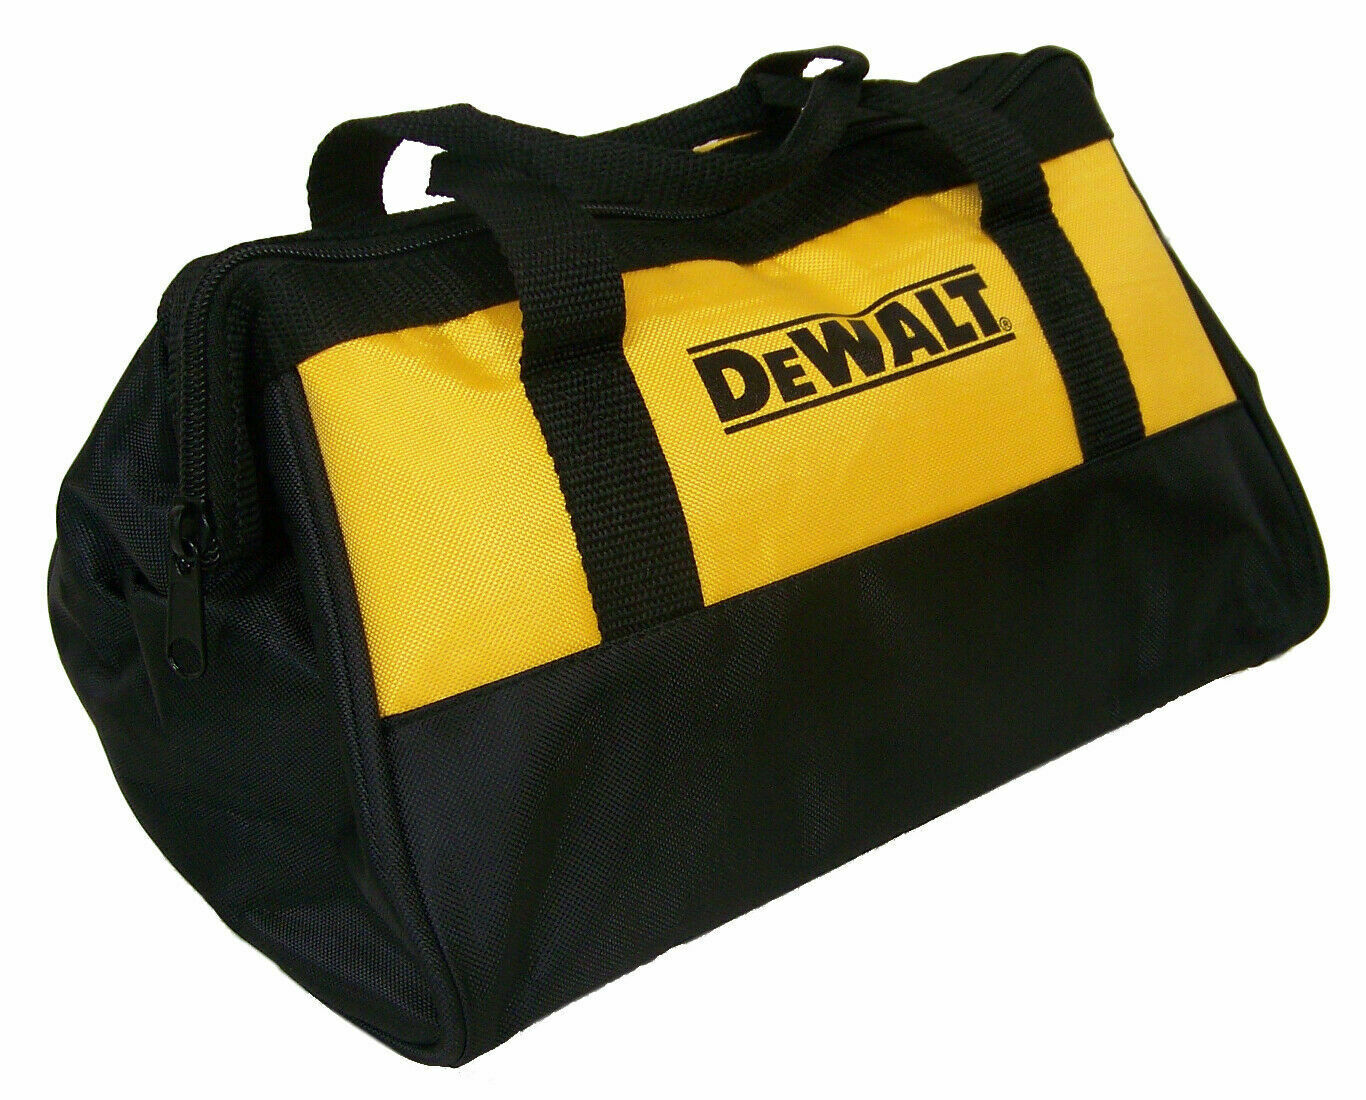 Dewalt Tool Bag Small Contractor Soft Storage Case Tote 20v 12v Drill Impact